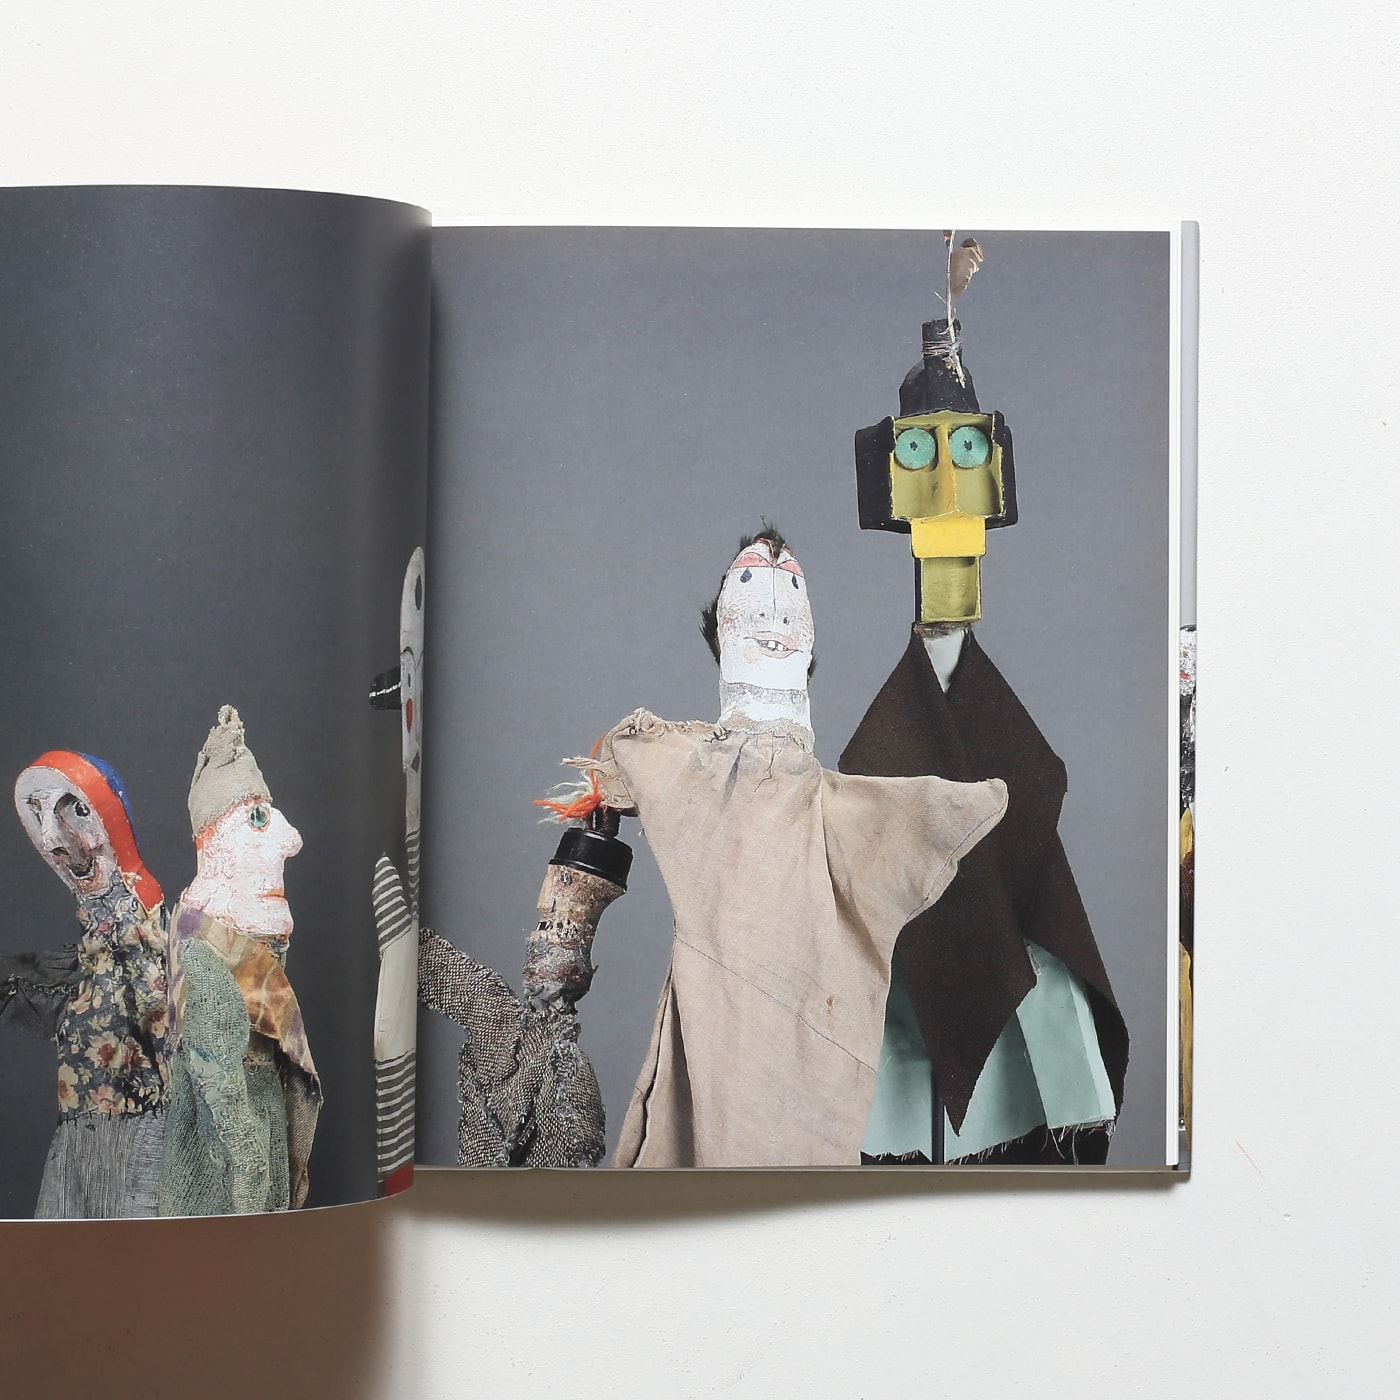 Paul Klee: Hand Puppets パウル・クレー - アート/エンタメ